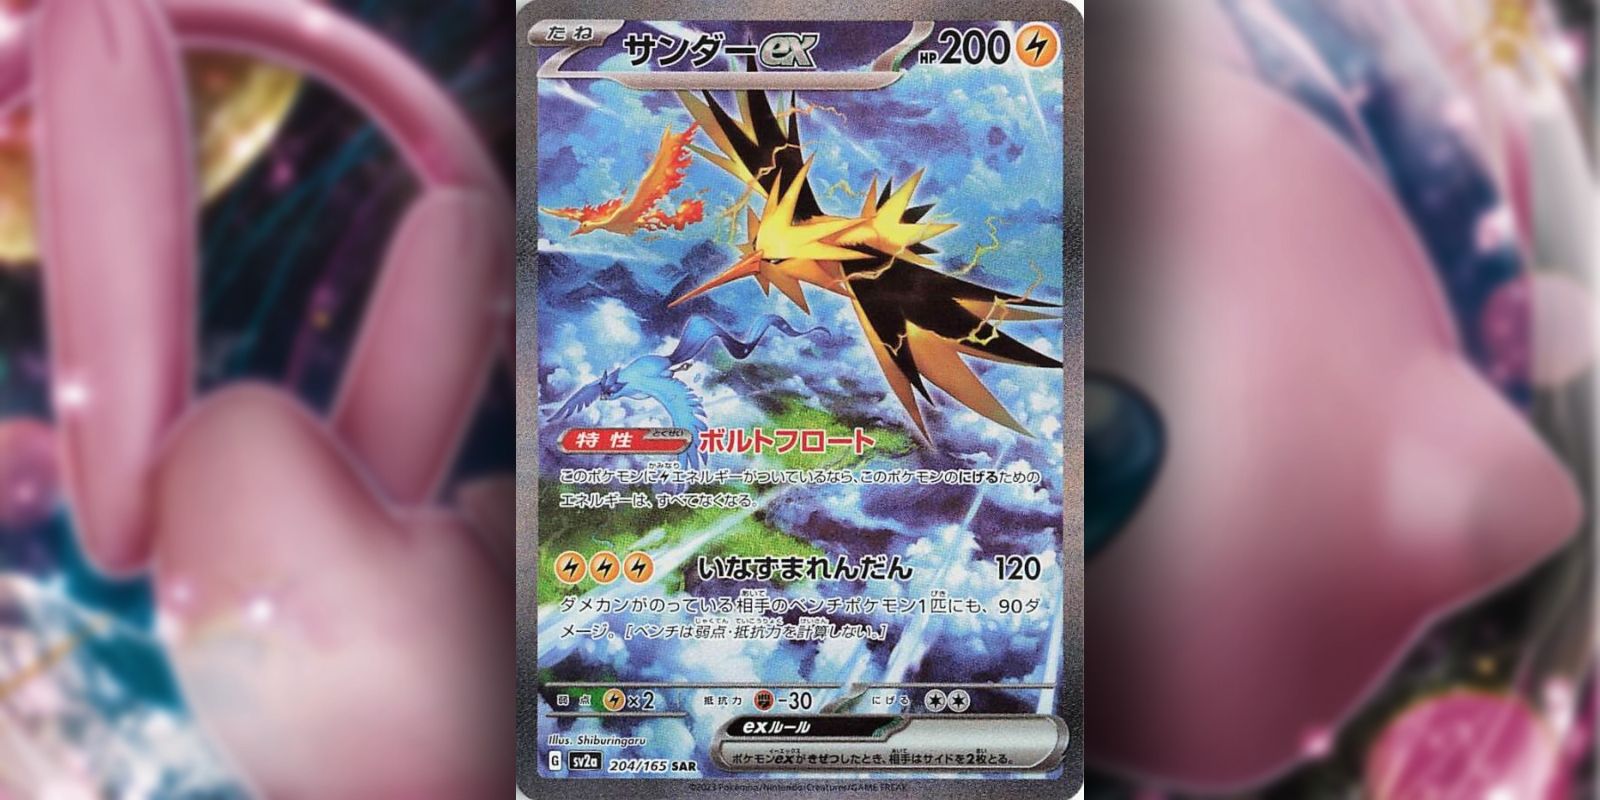 Pokemon Card 151 Zapdos ex Secret Rare card ditumpangkan di atas gambar Mew.